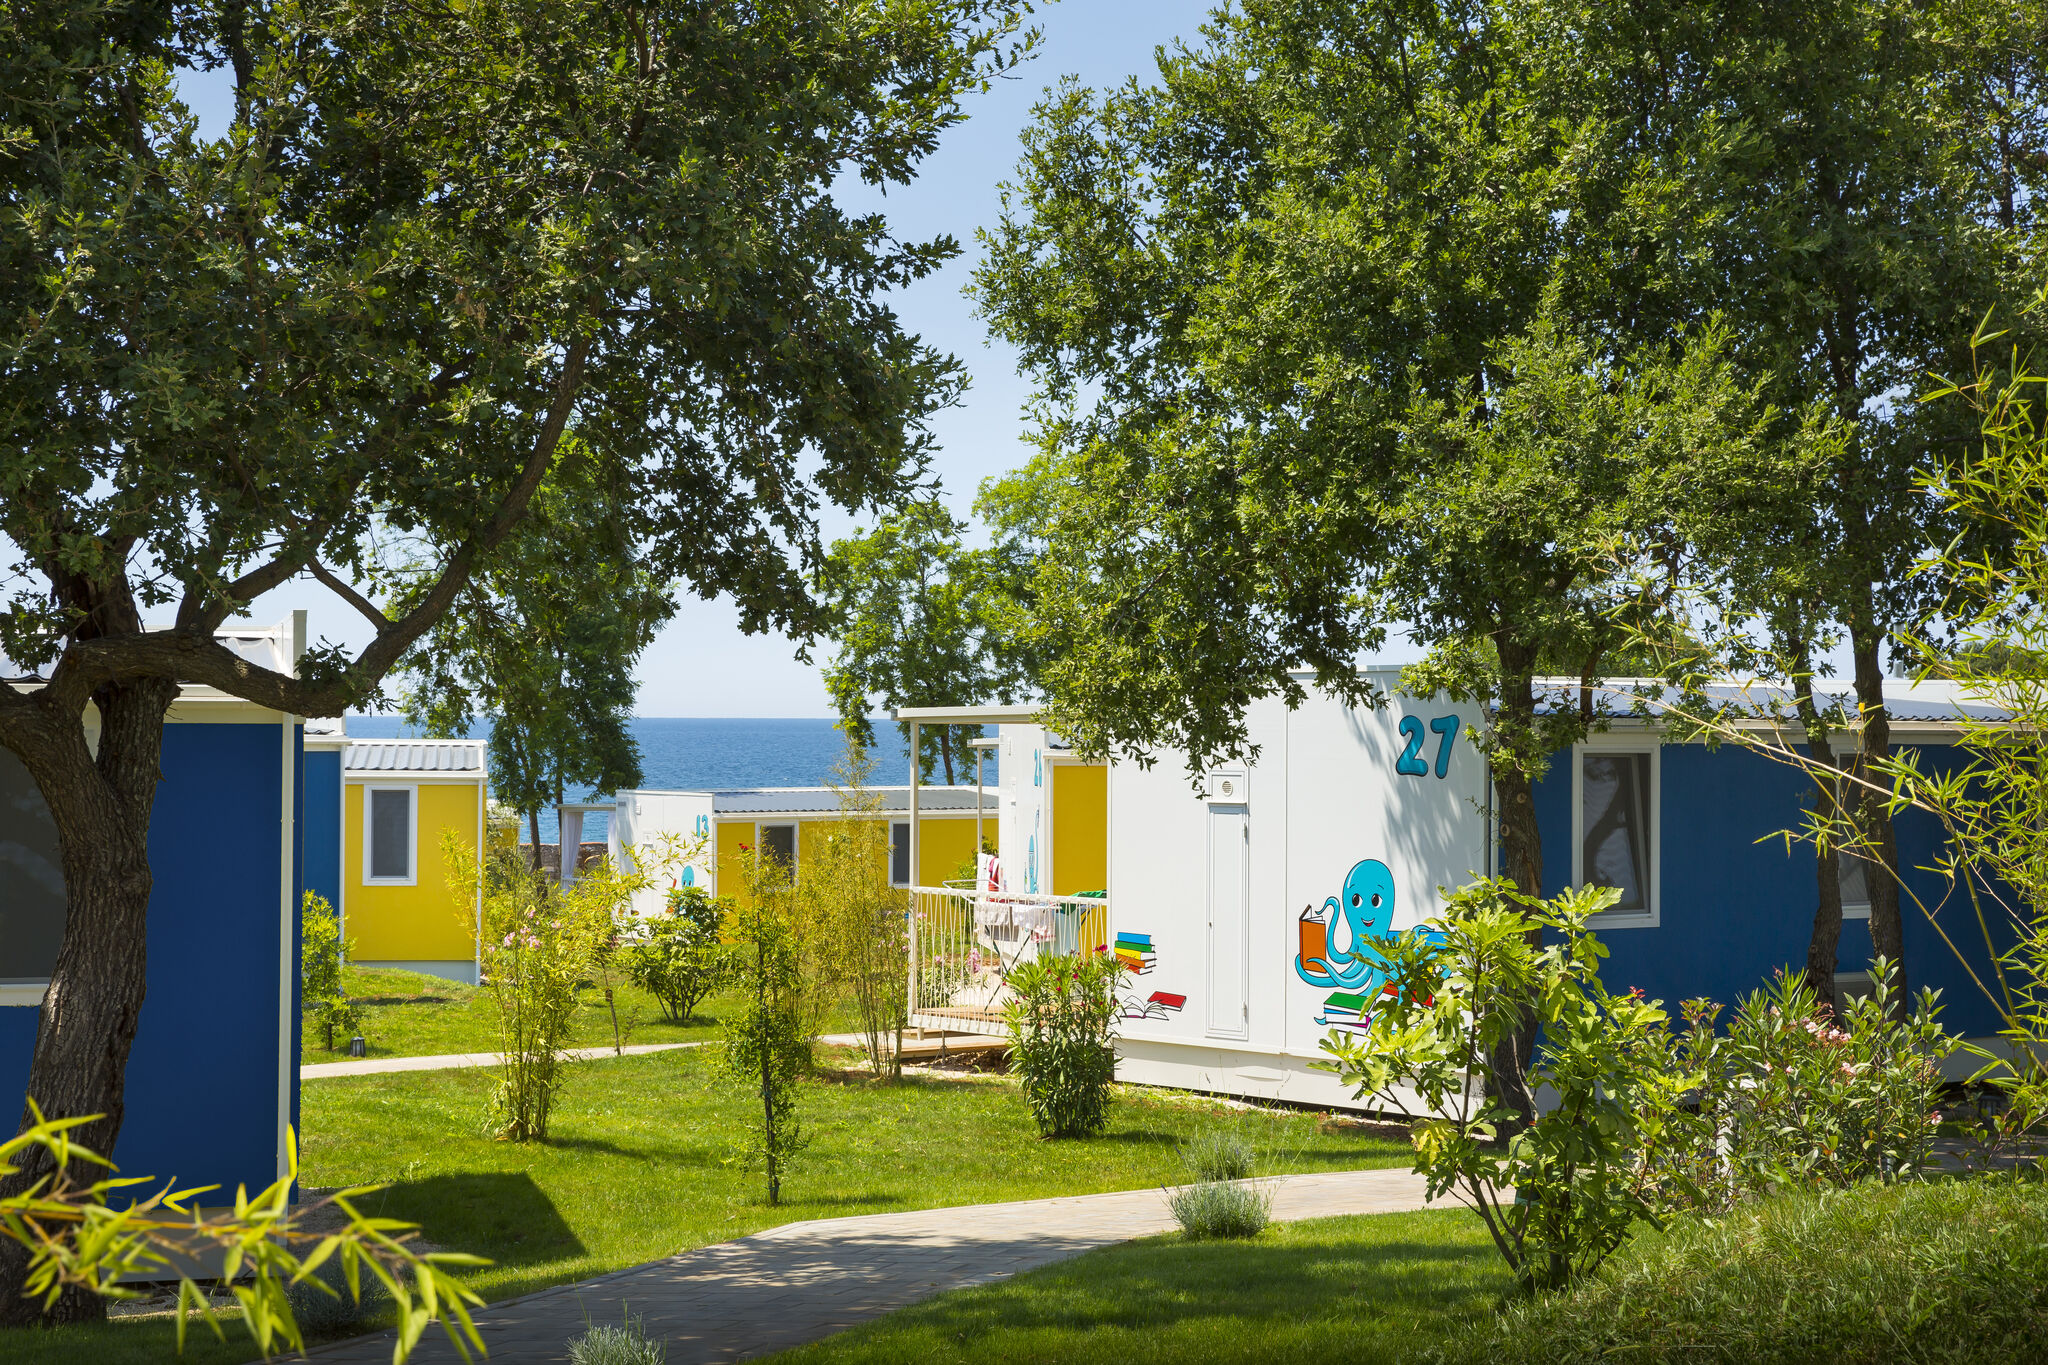 Mobile home Mirami in Aminess Maravea Camping Resort near Novigrad, with pools